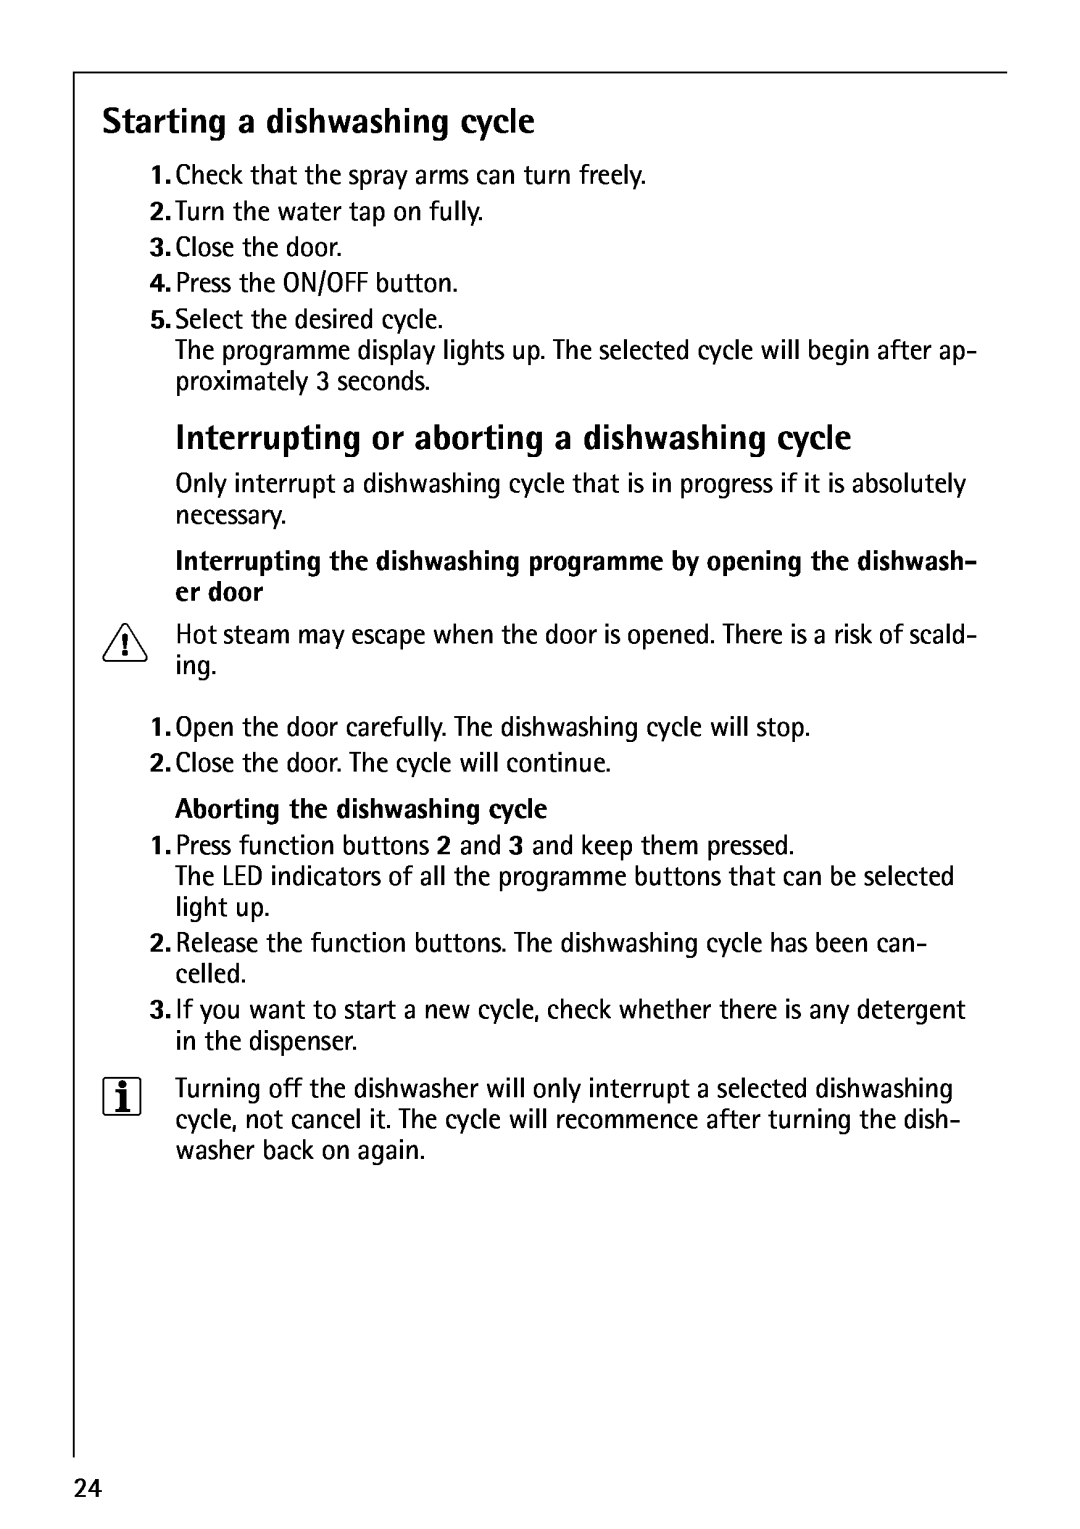 AEG 44080 I Starting a dishwashing cycle, Interrupting or aborting a dishwashing cycle, Aborting the dishwashing cycle 